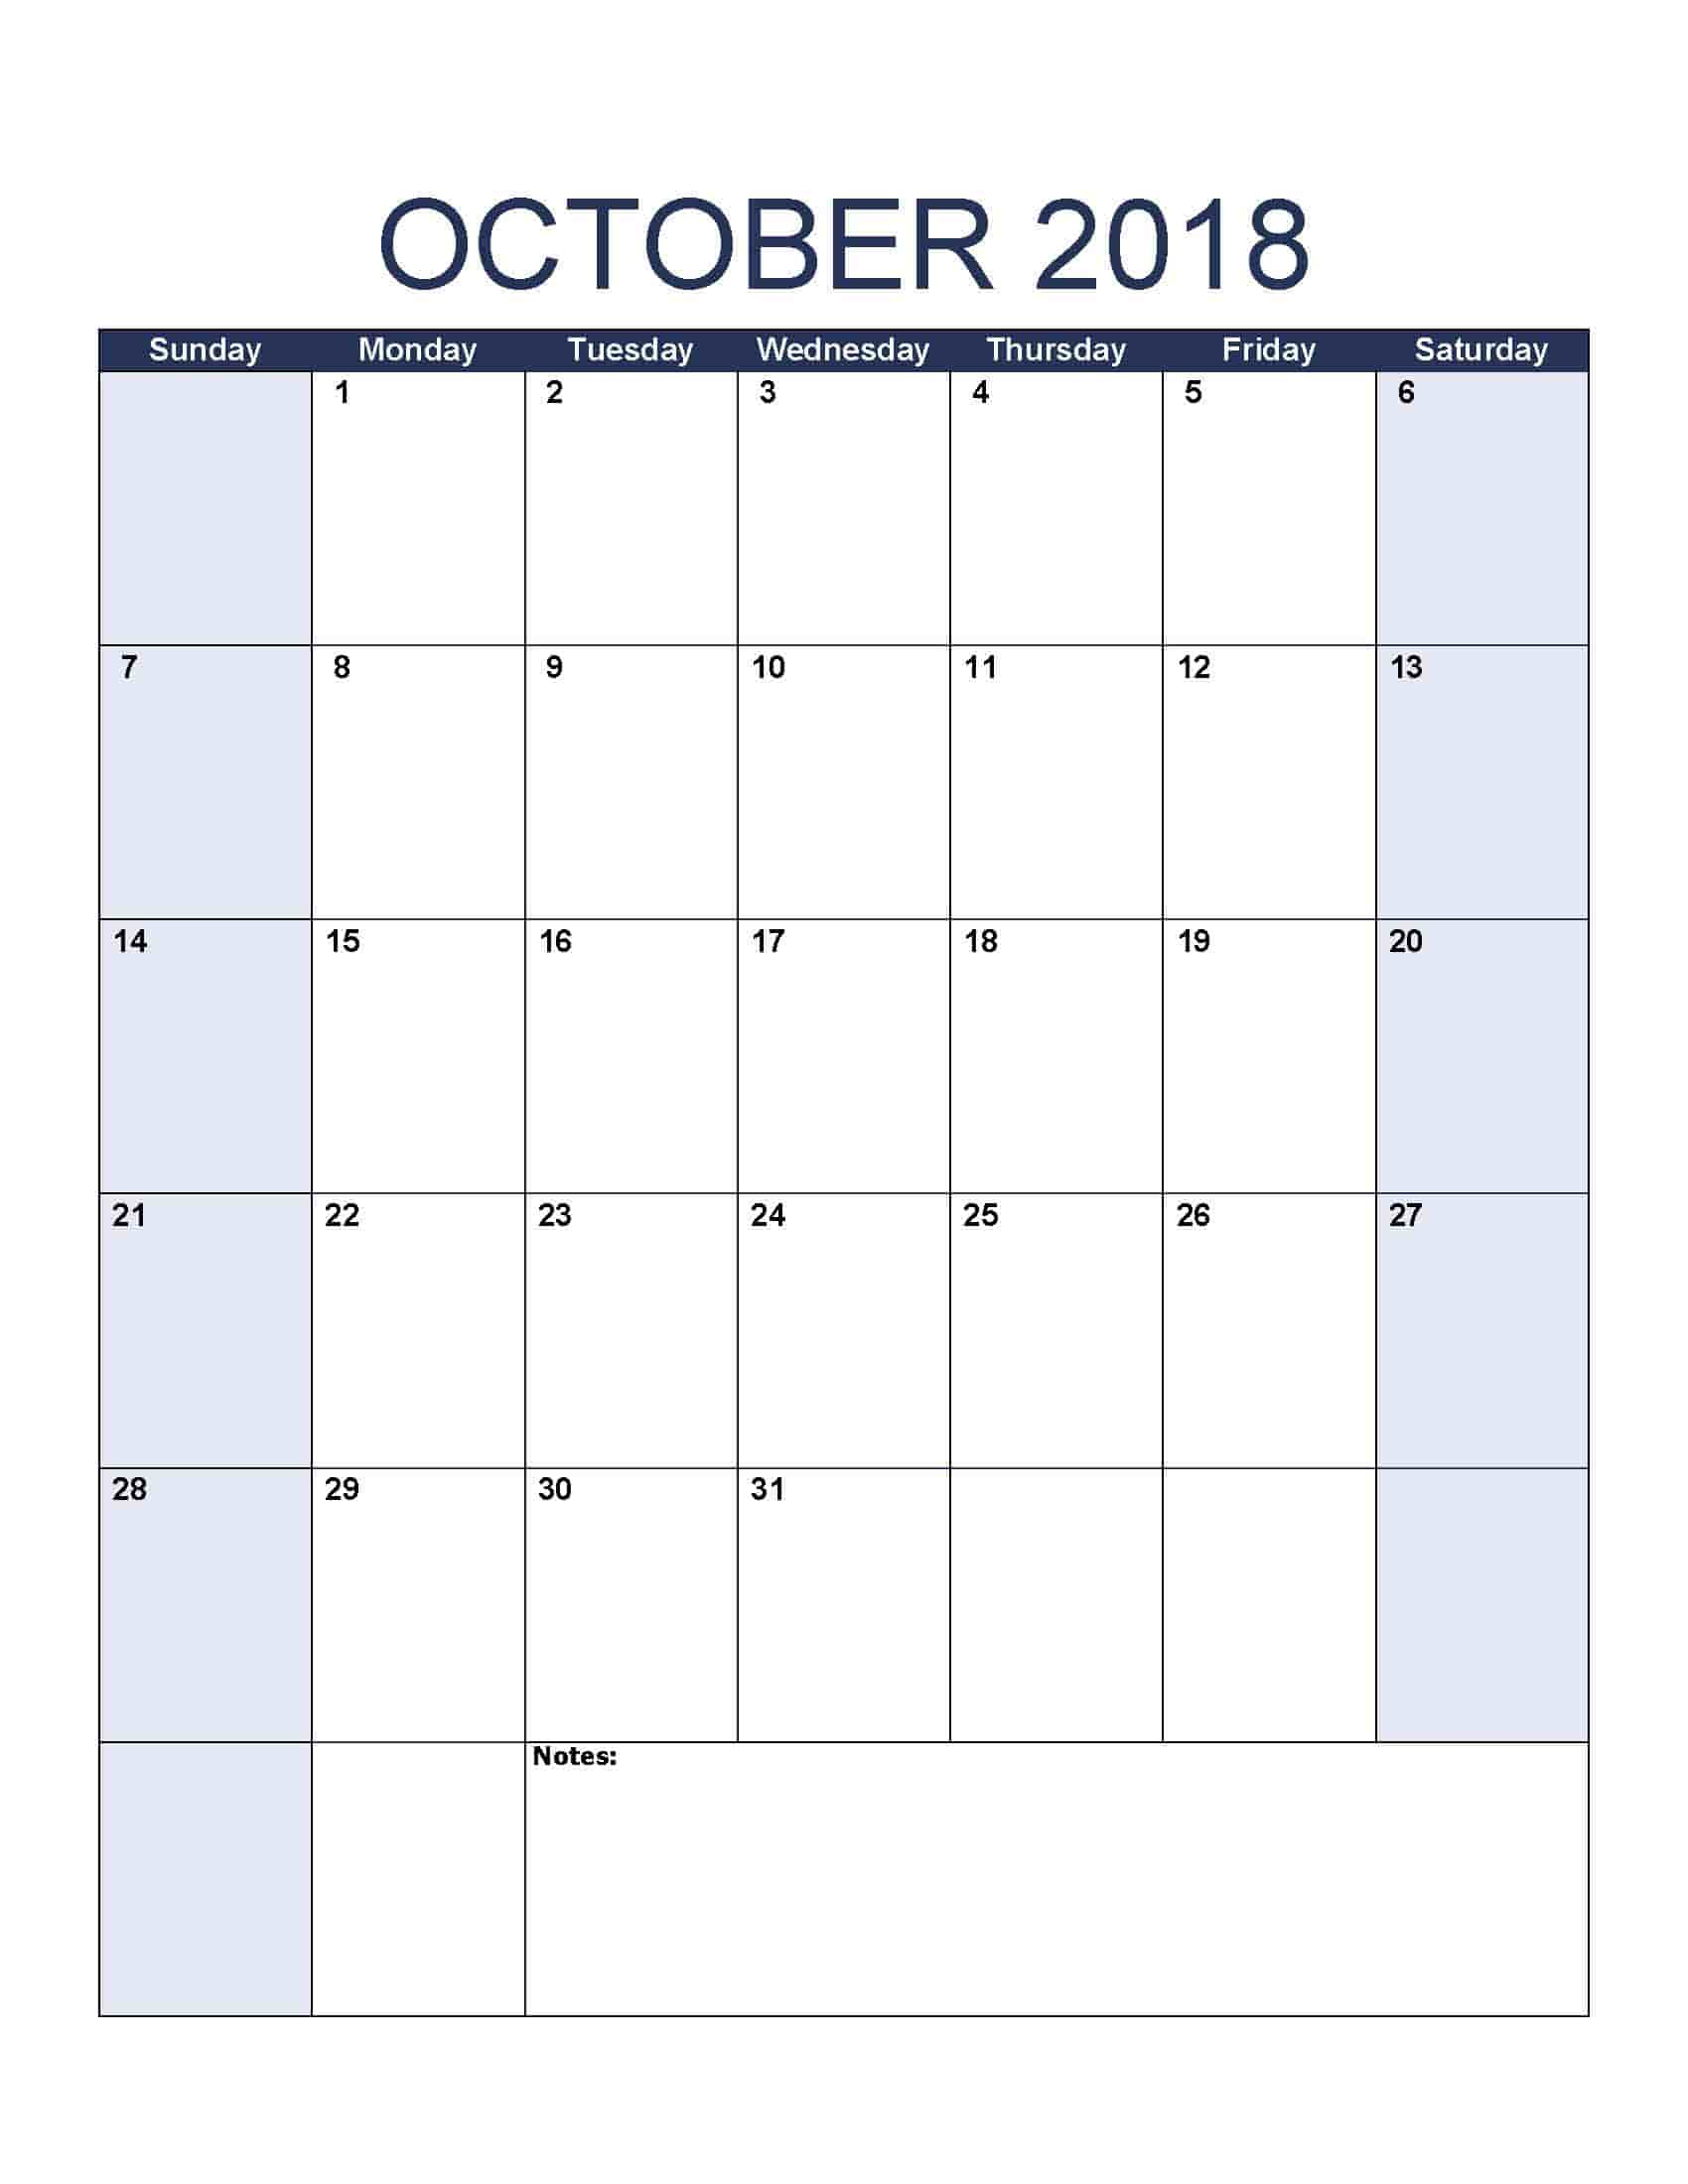 October 2018 Calendar - Free, Printable Calendar Templates pertaining to Blank Calander Template